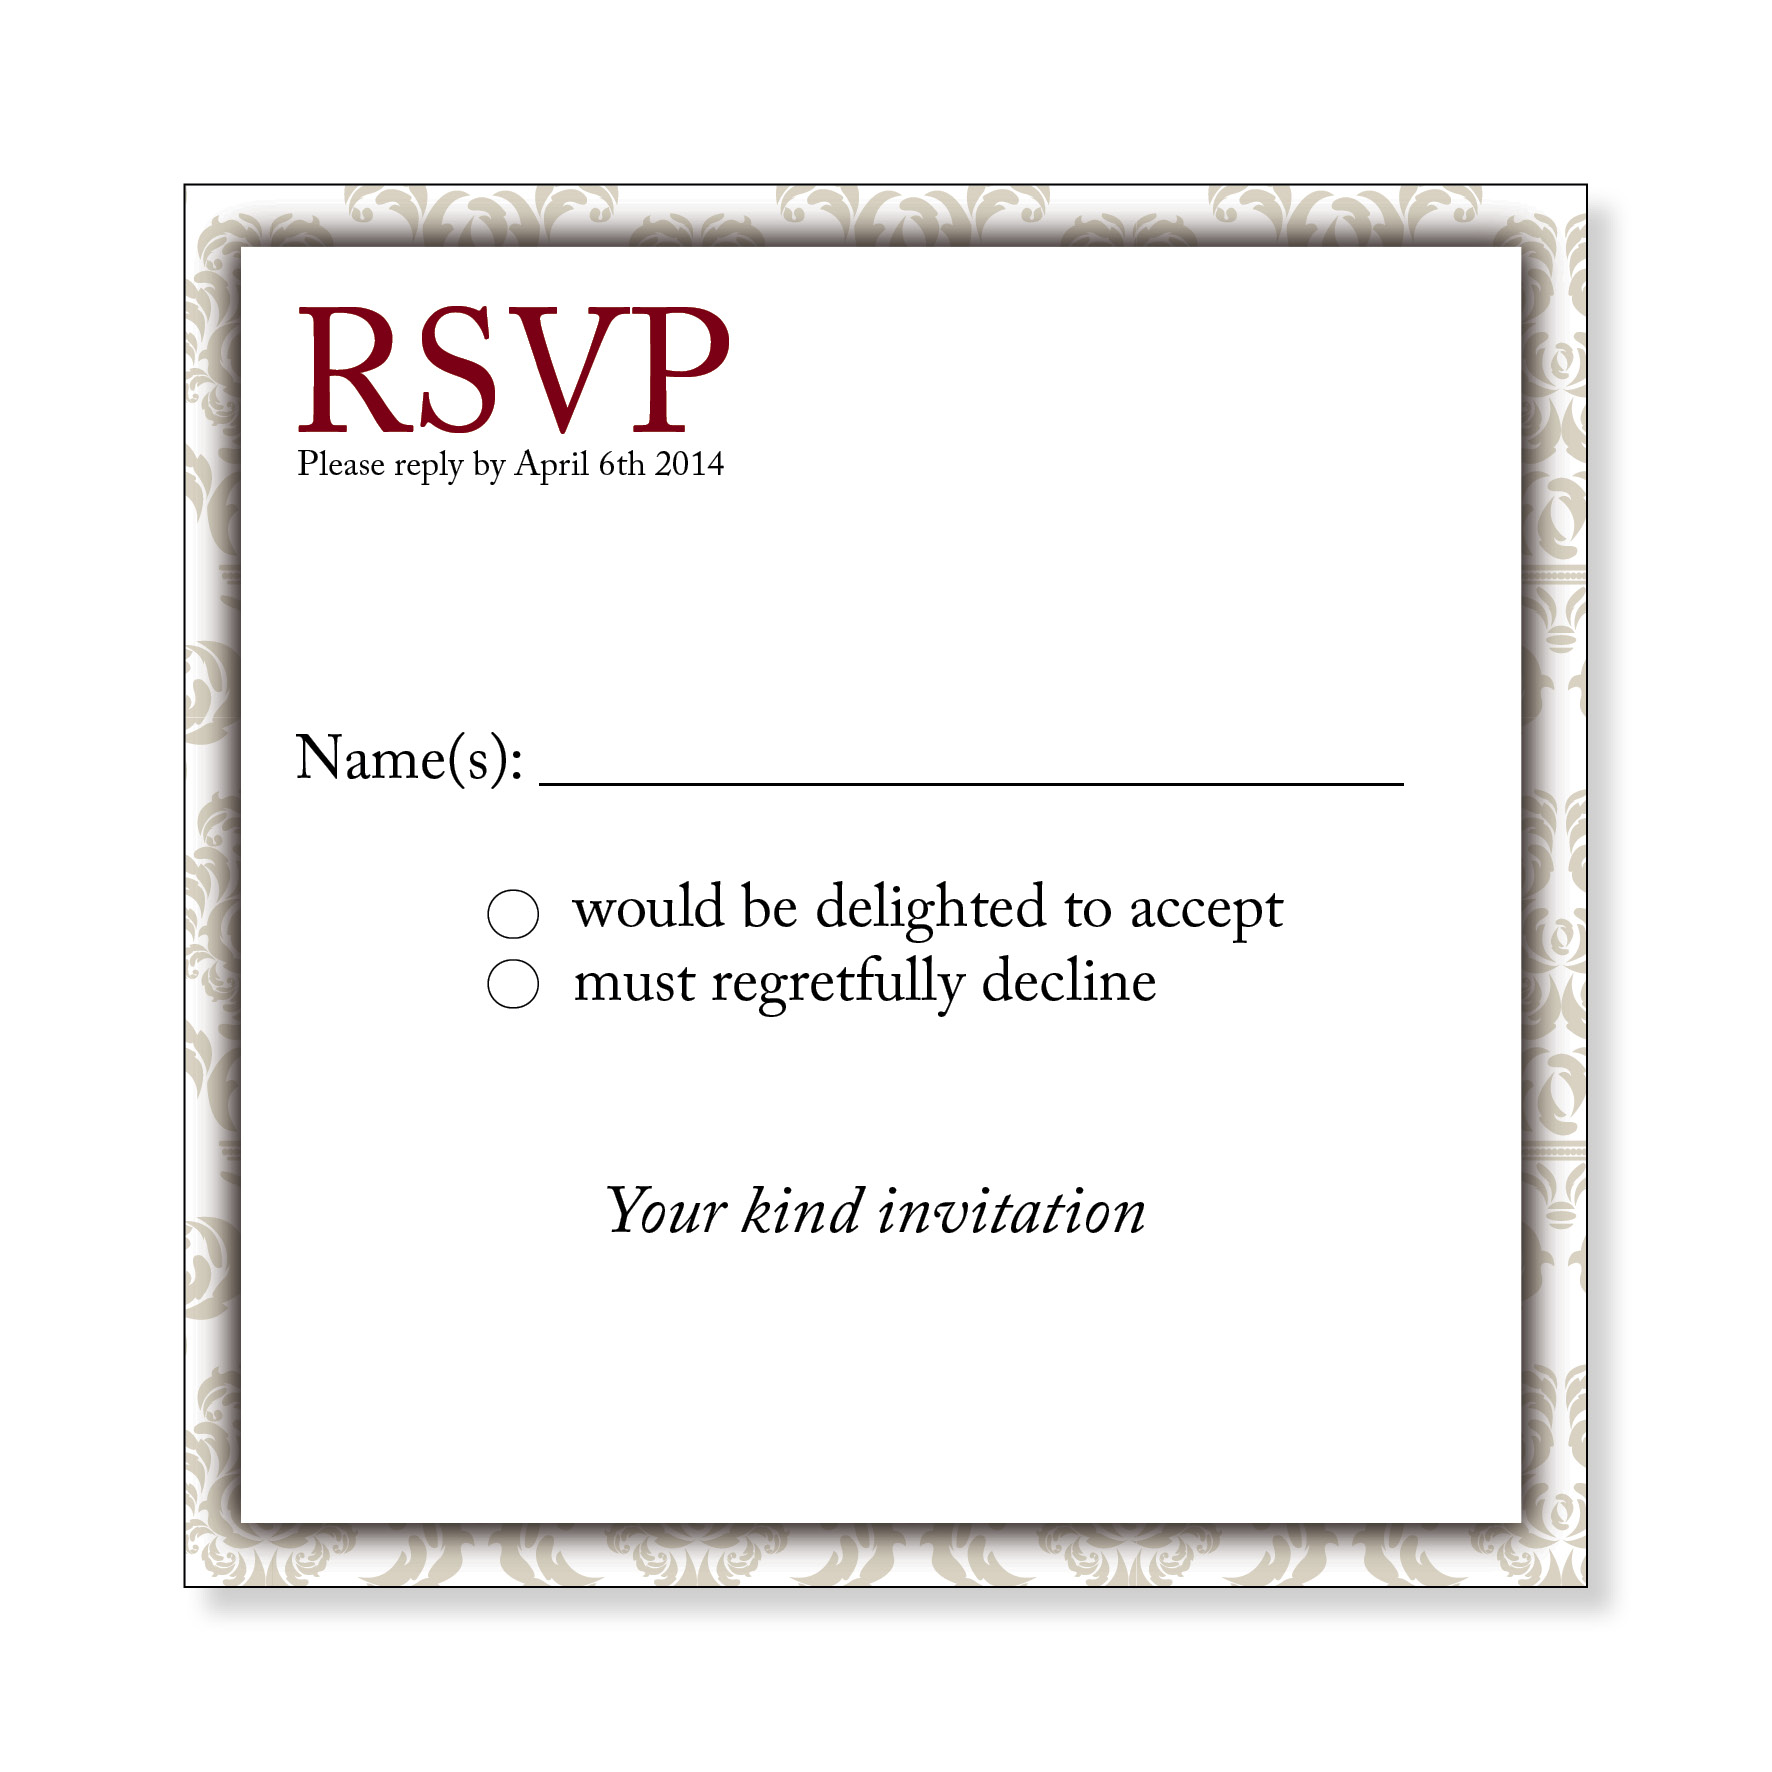 RSVP card